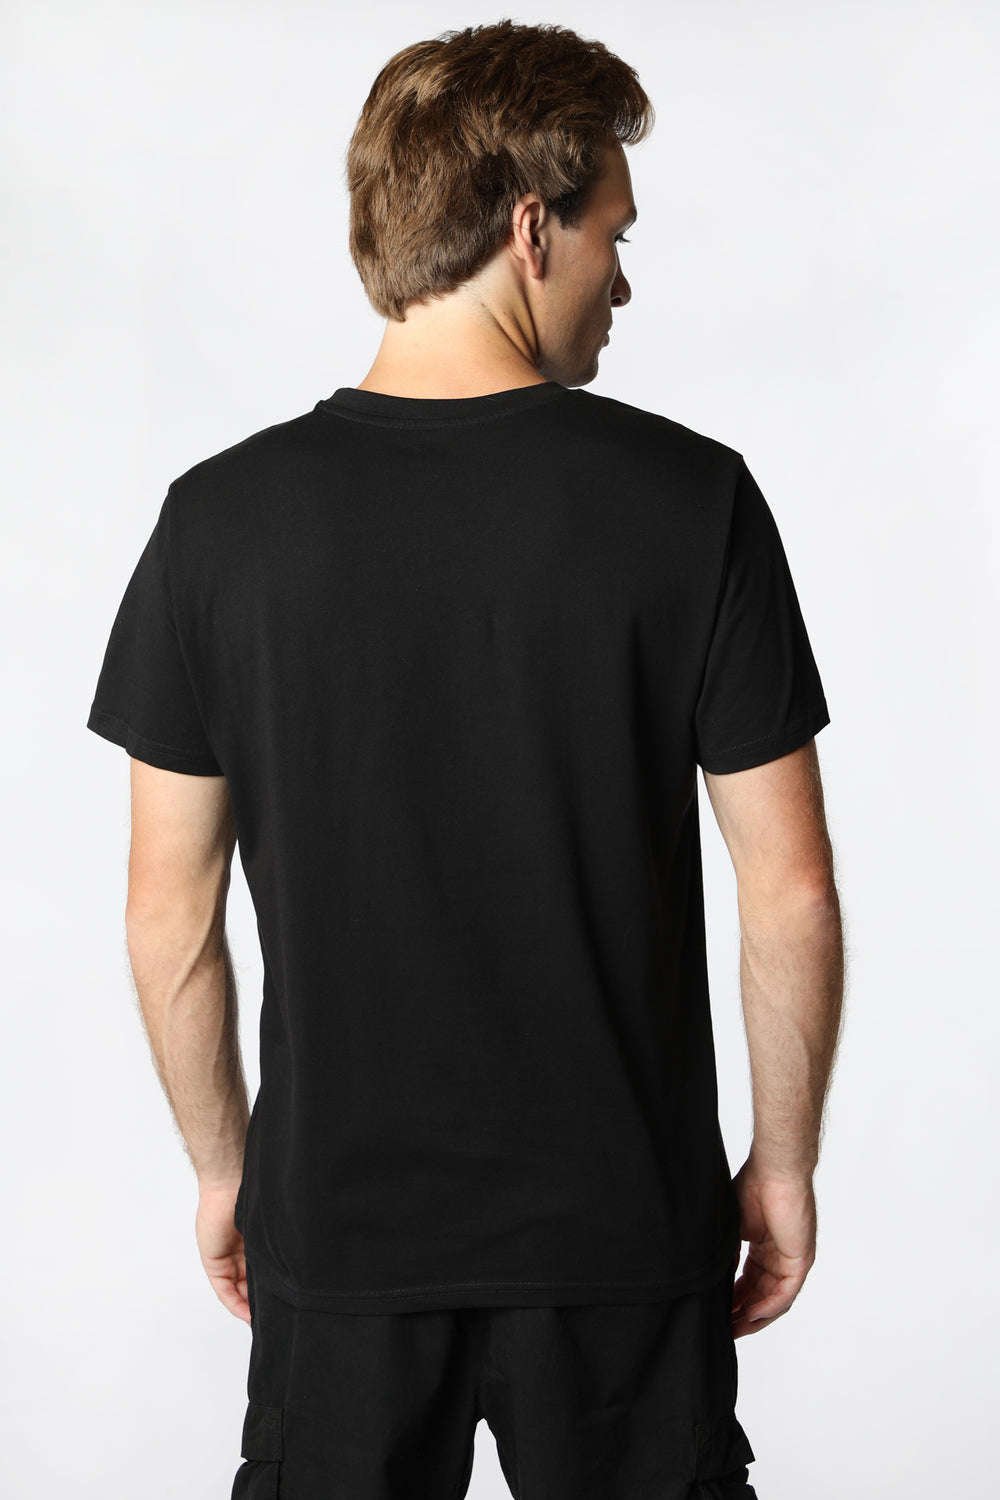 T-Shirt Imprimé Born To Skate Zoo York Homme Noir